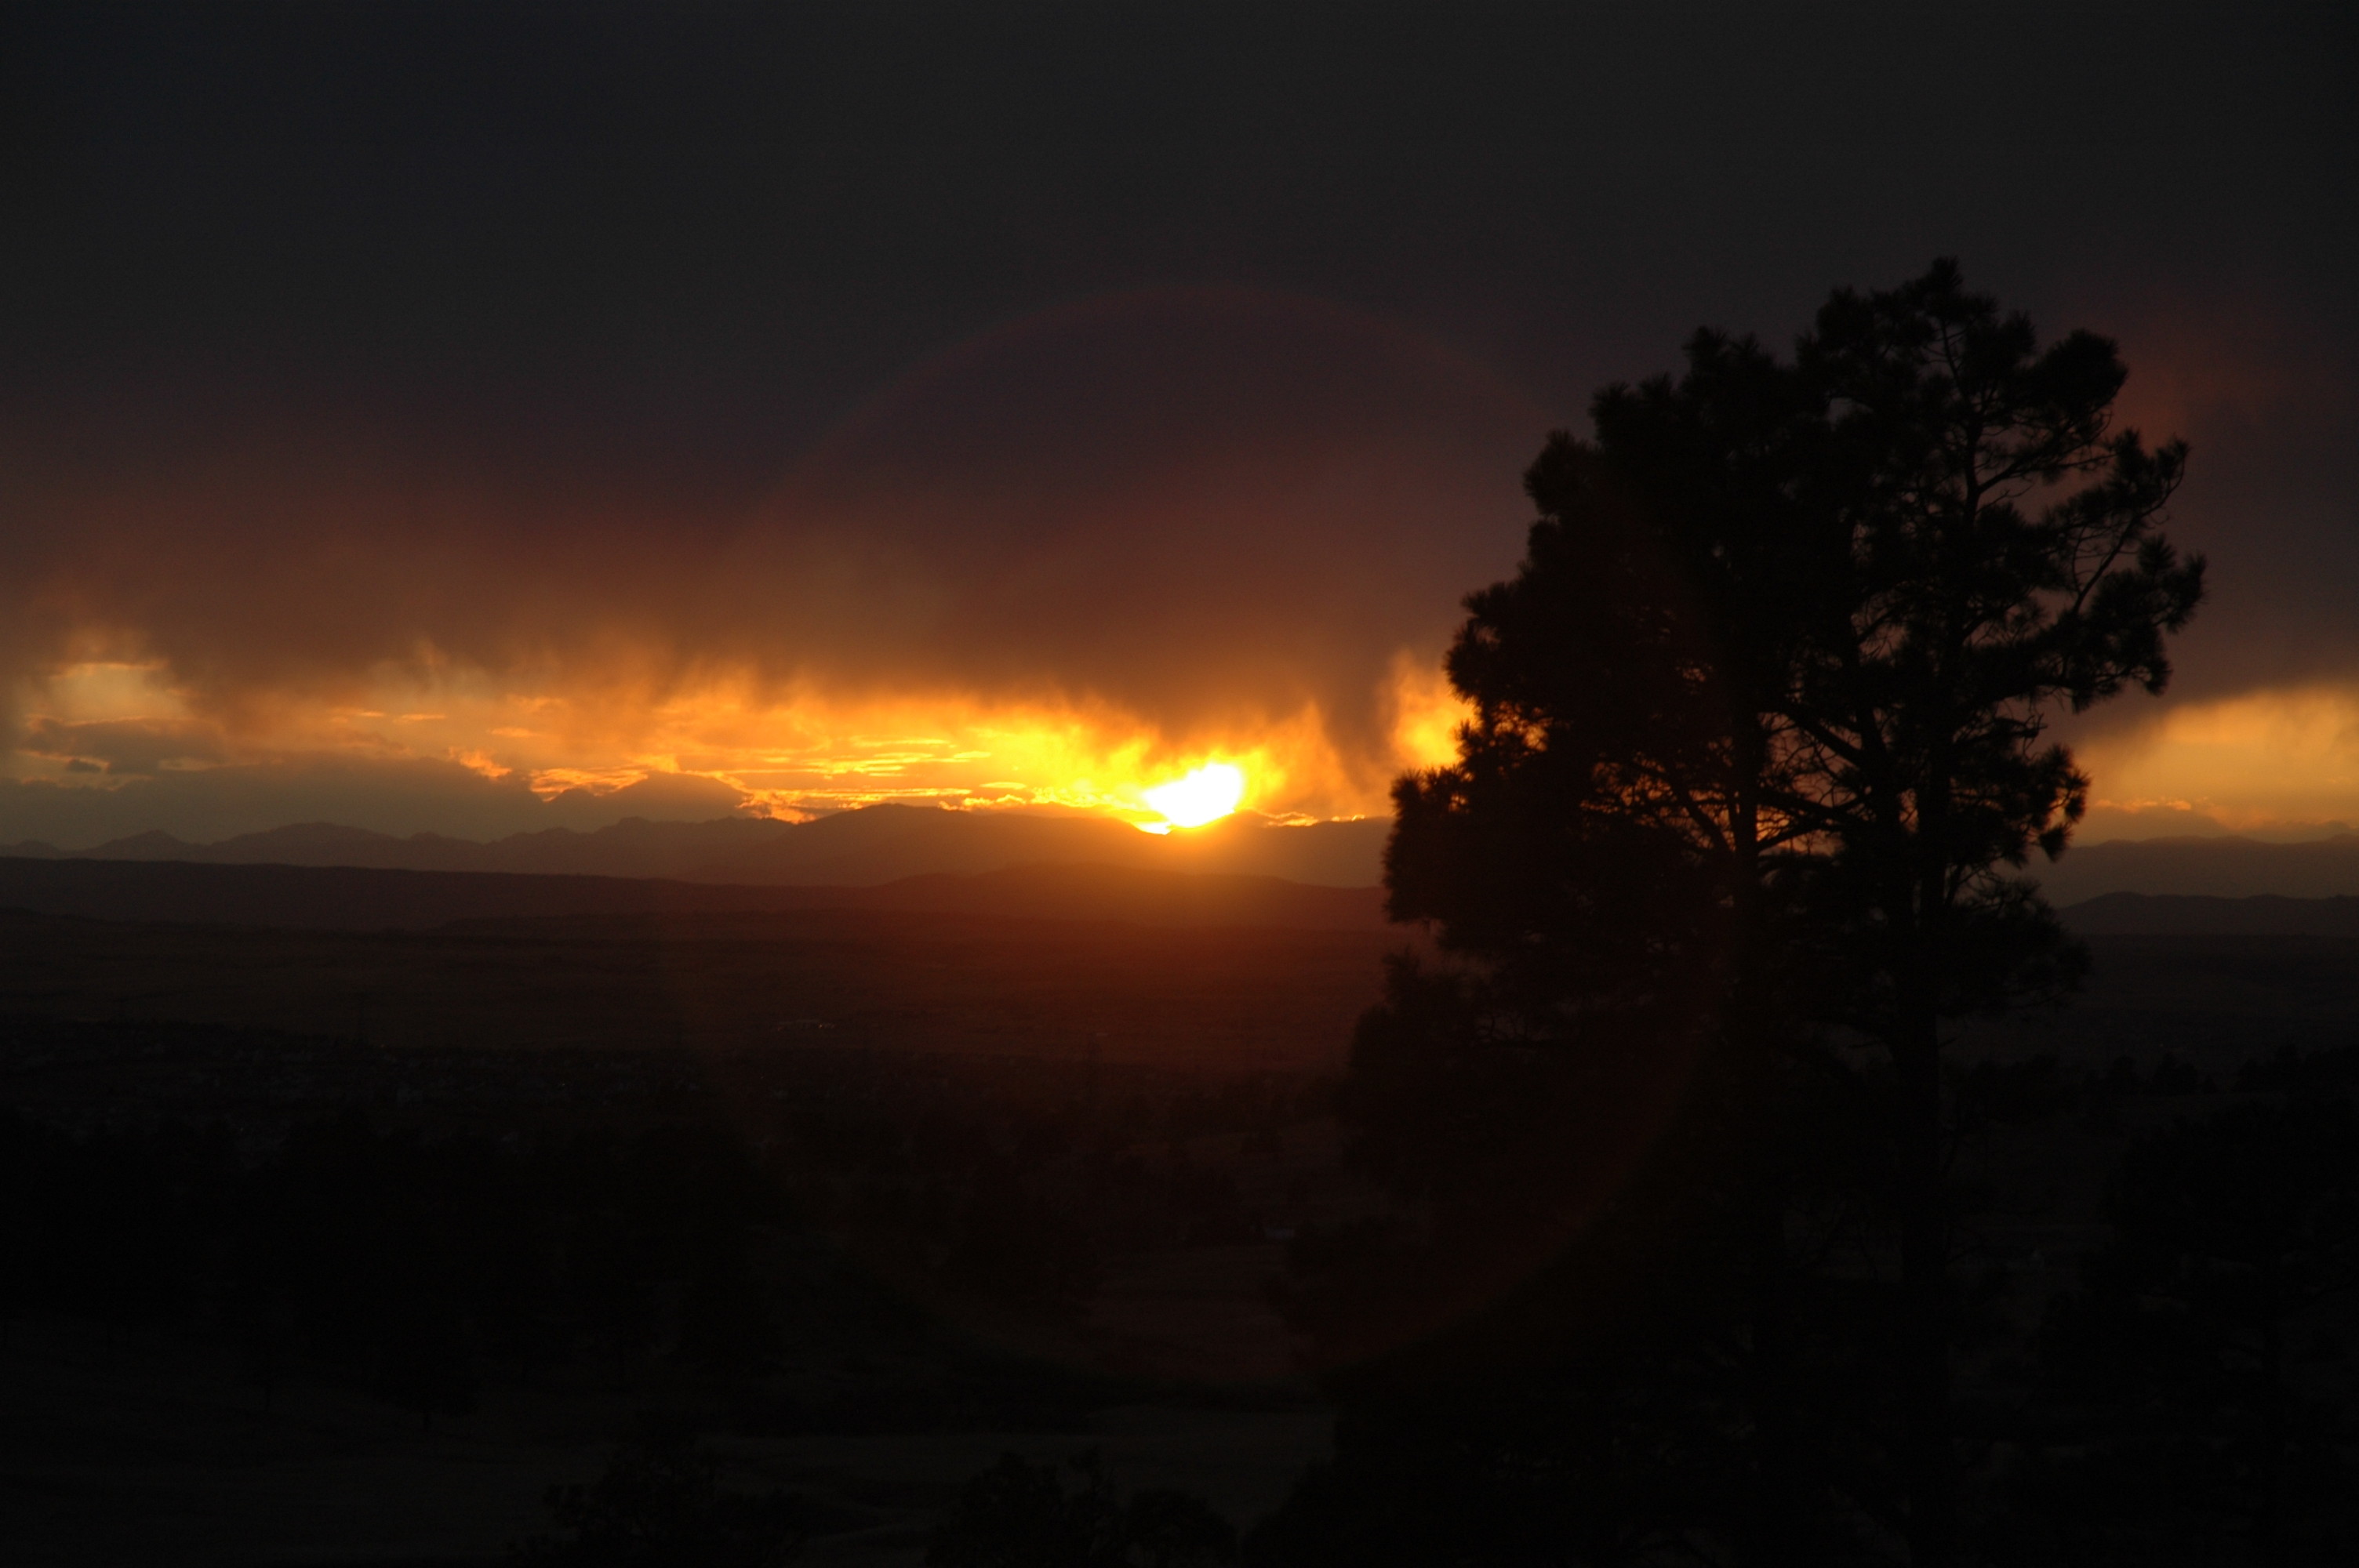 3008x2000 ... 1680 x 1050, 1440 x 900, 1280 x 1024, 1024 x 768 (posted 12/01/07)  (keywords: sunset, fall, rain, clouds, mountains, Rockies, Colorado)